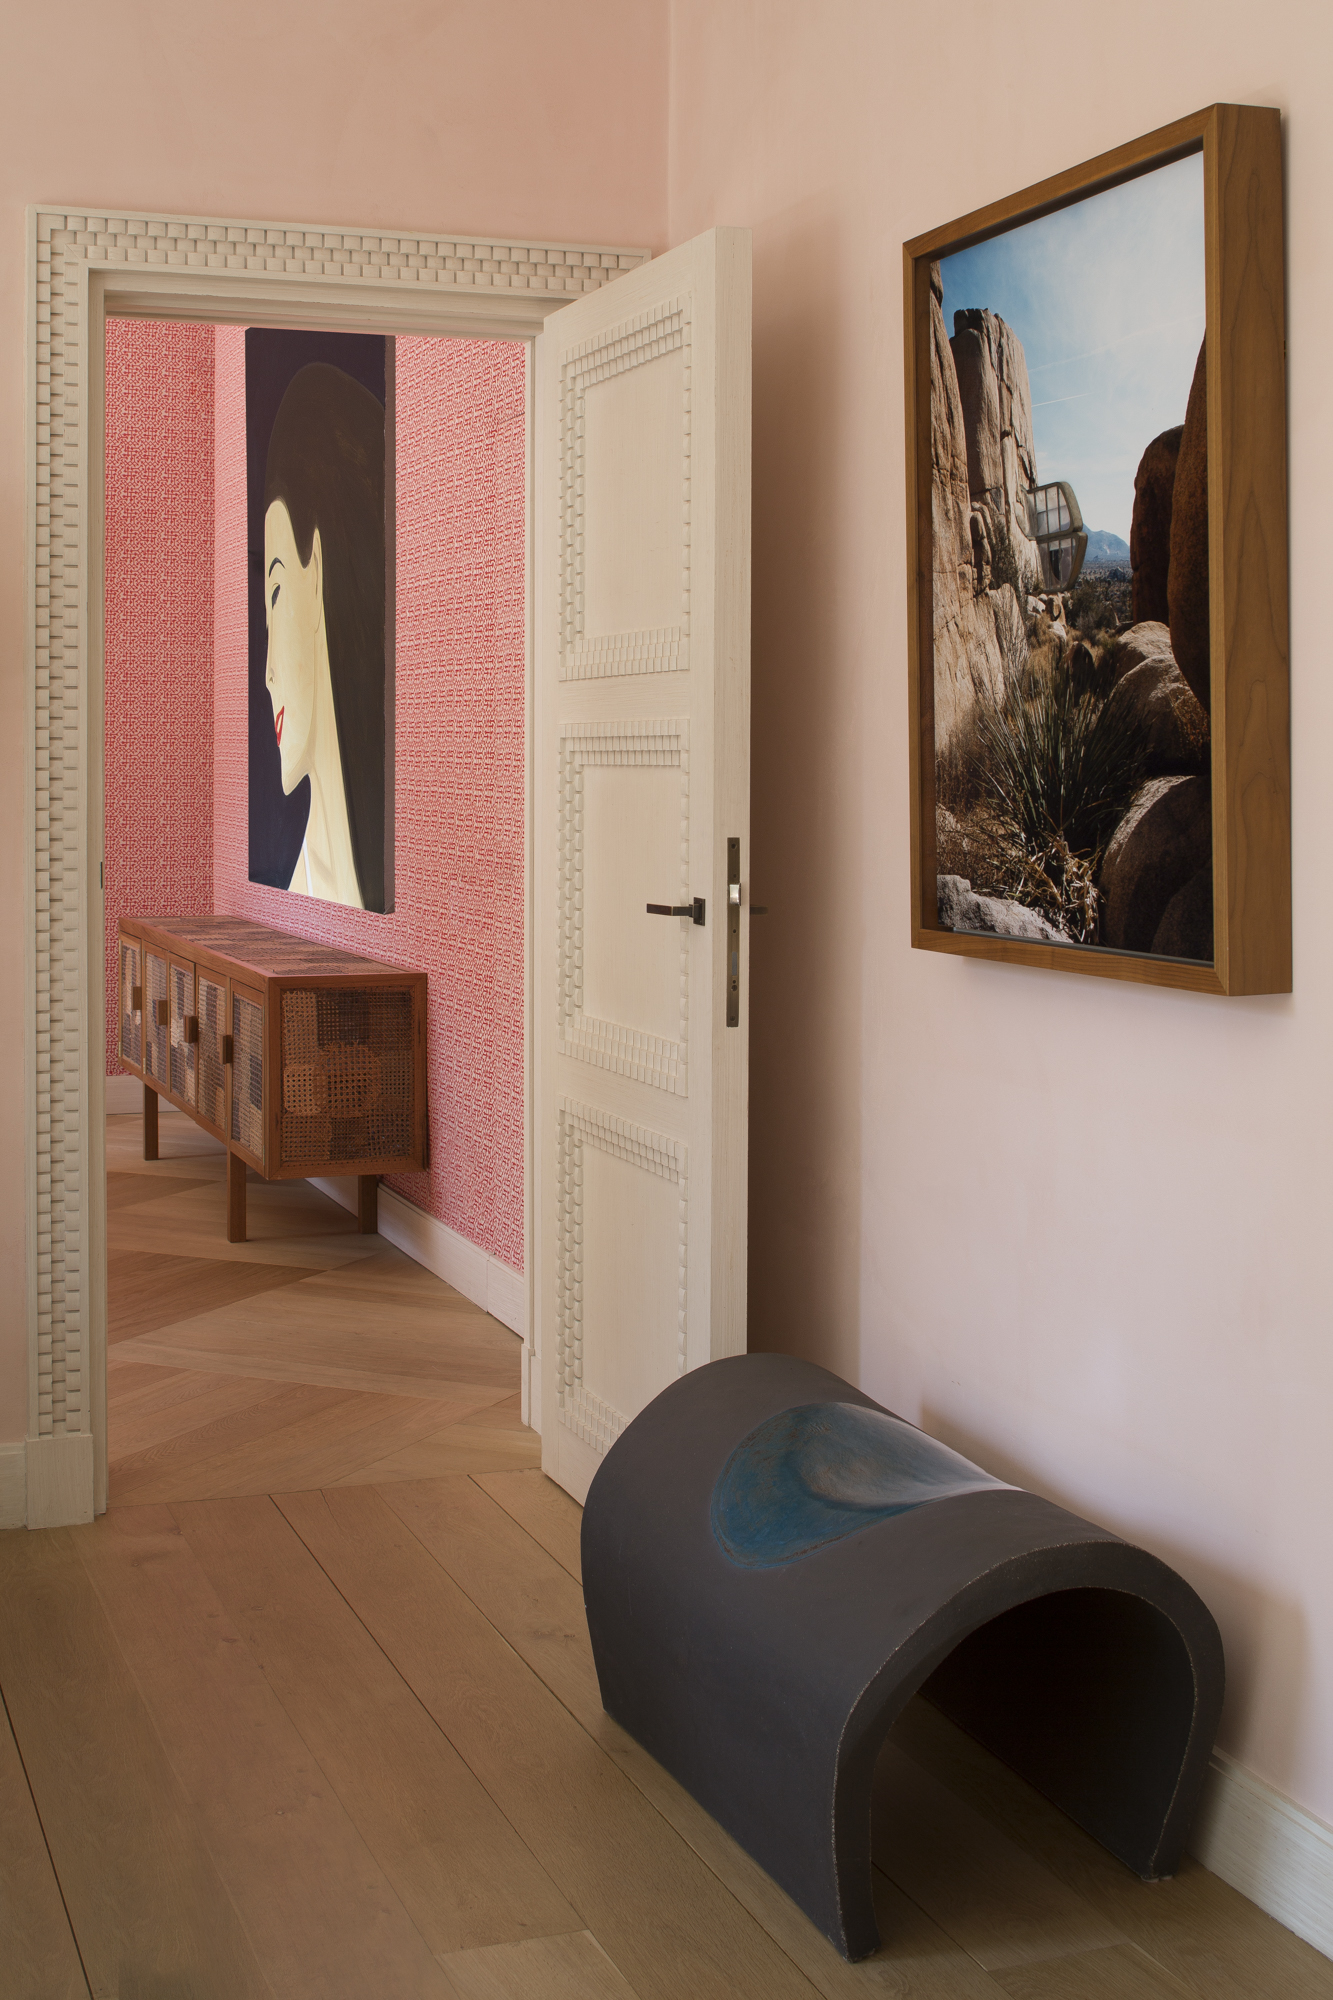 Féau Boiseries doorway inspired by one of Emile-Jacques Ruhlmann's art deco motifs